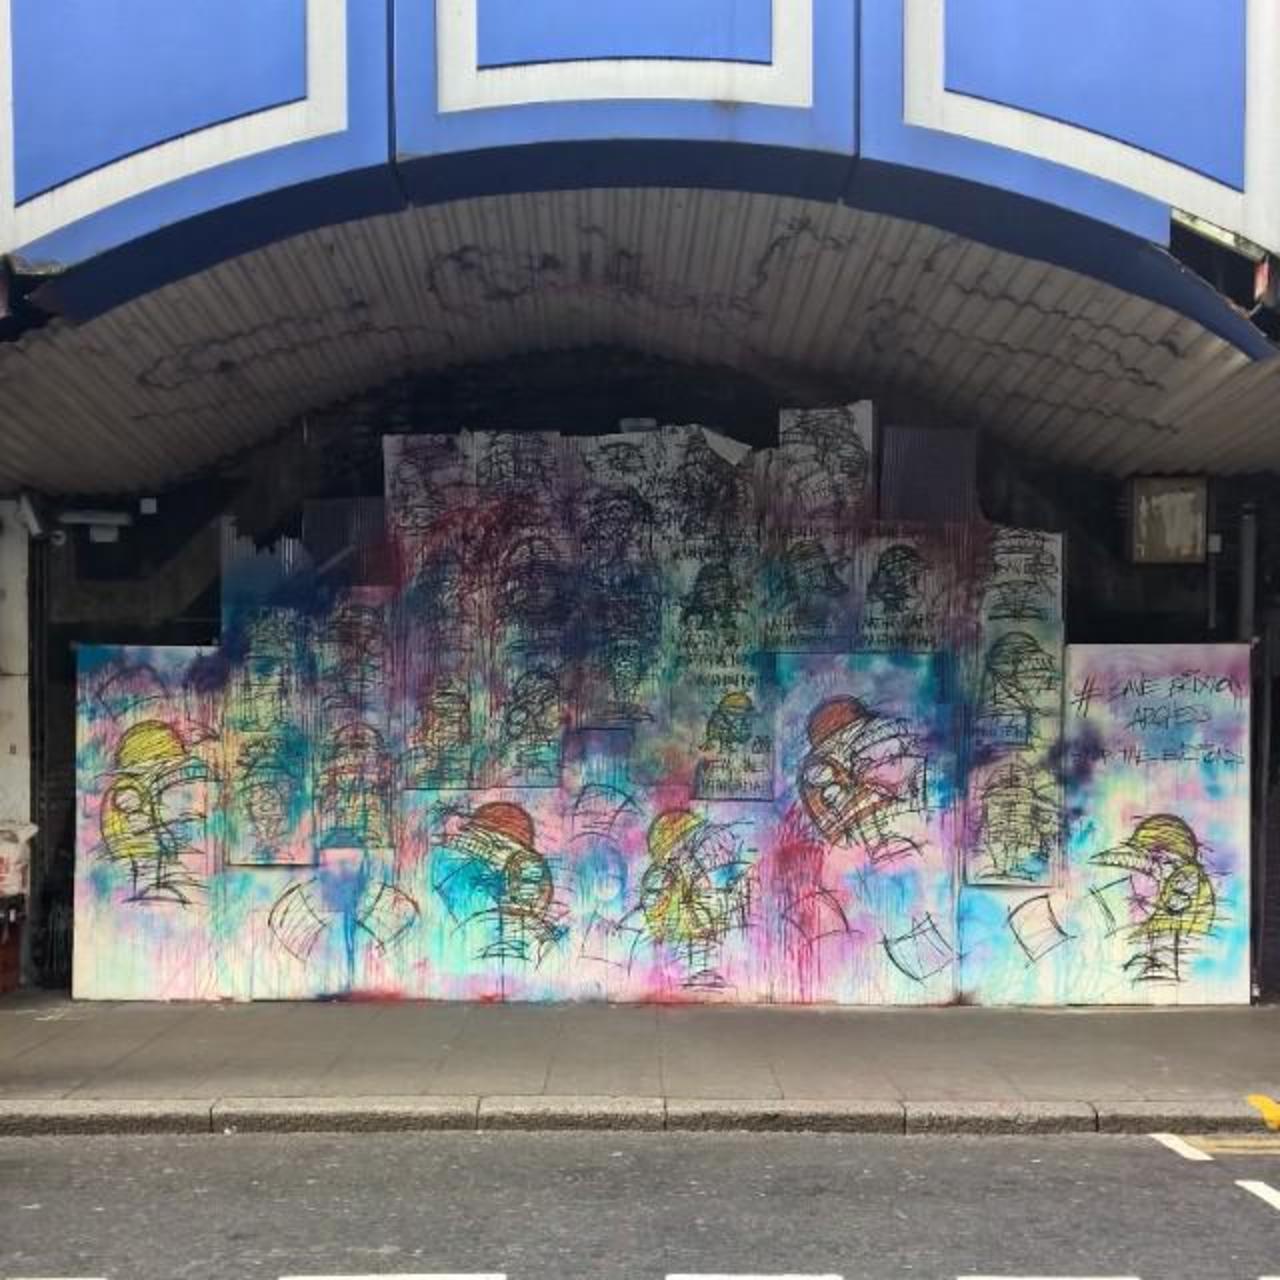 Astonishing #mural on Atlantic Road for #SaveBrixtonArches by @nathanbowenart.
#streetart #graffiti #Brixton #commu… http://t.co/wxWJ6FClyk